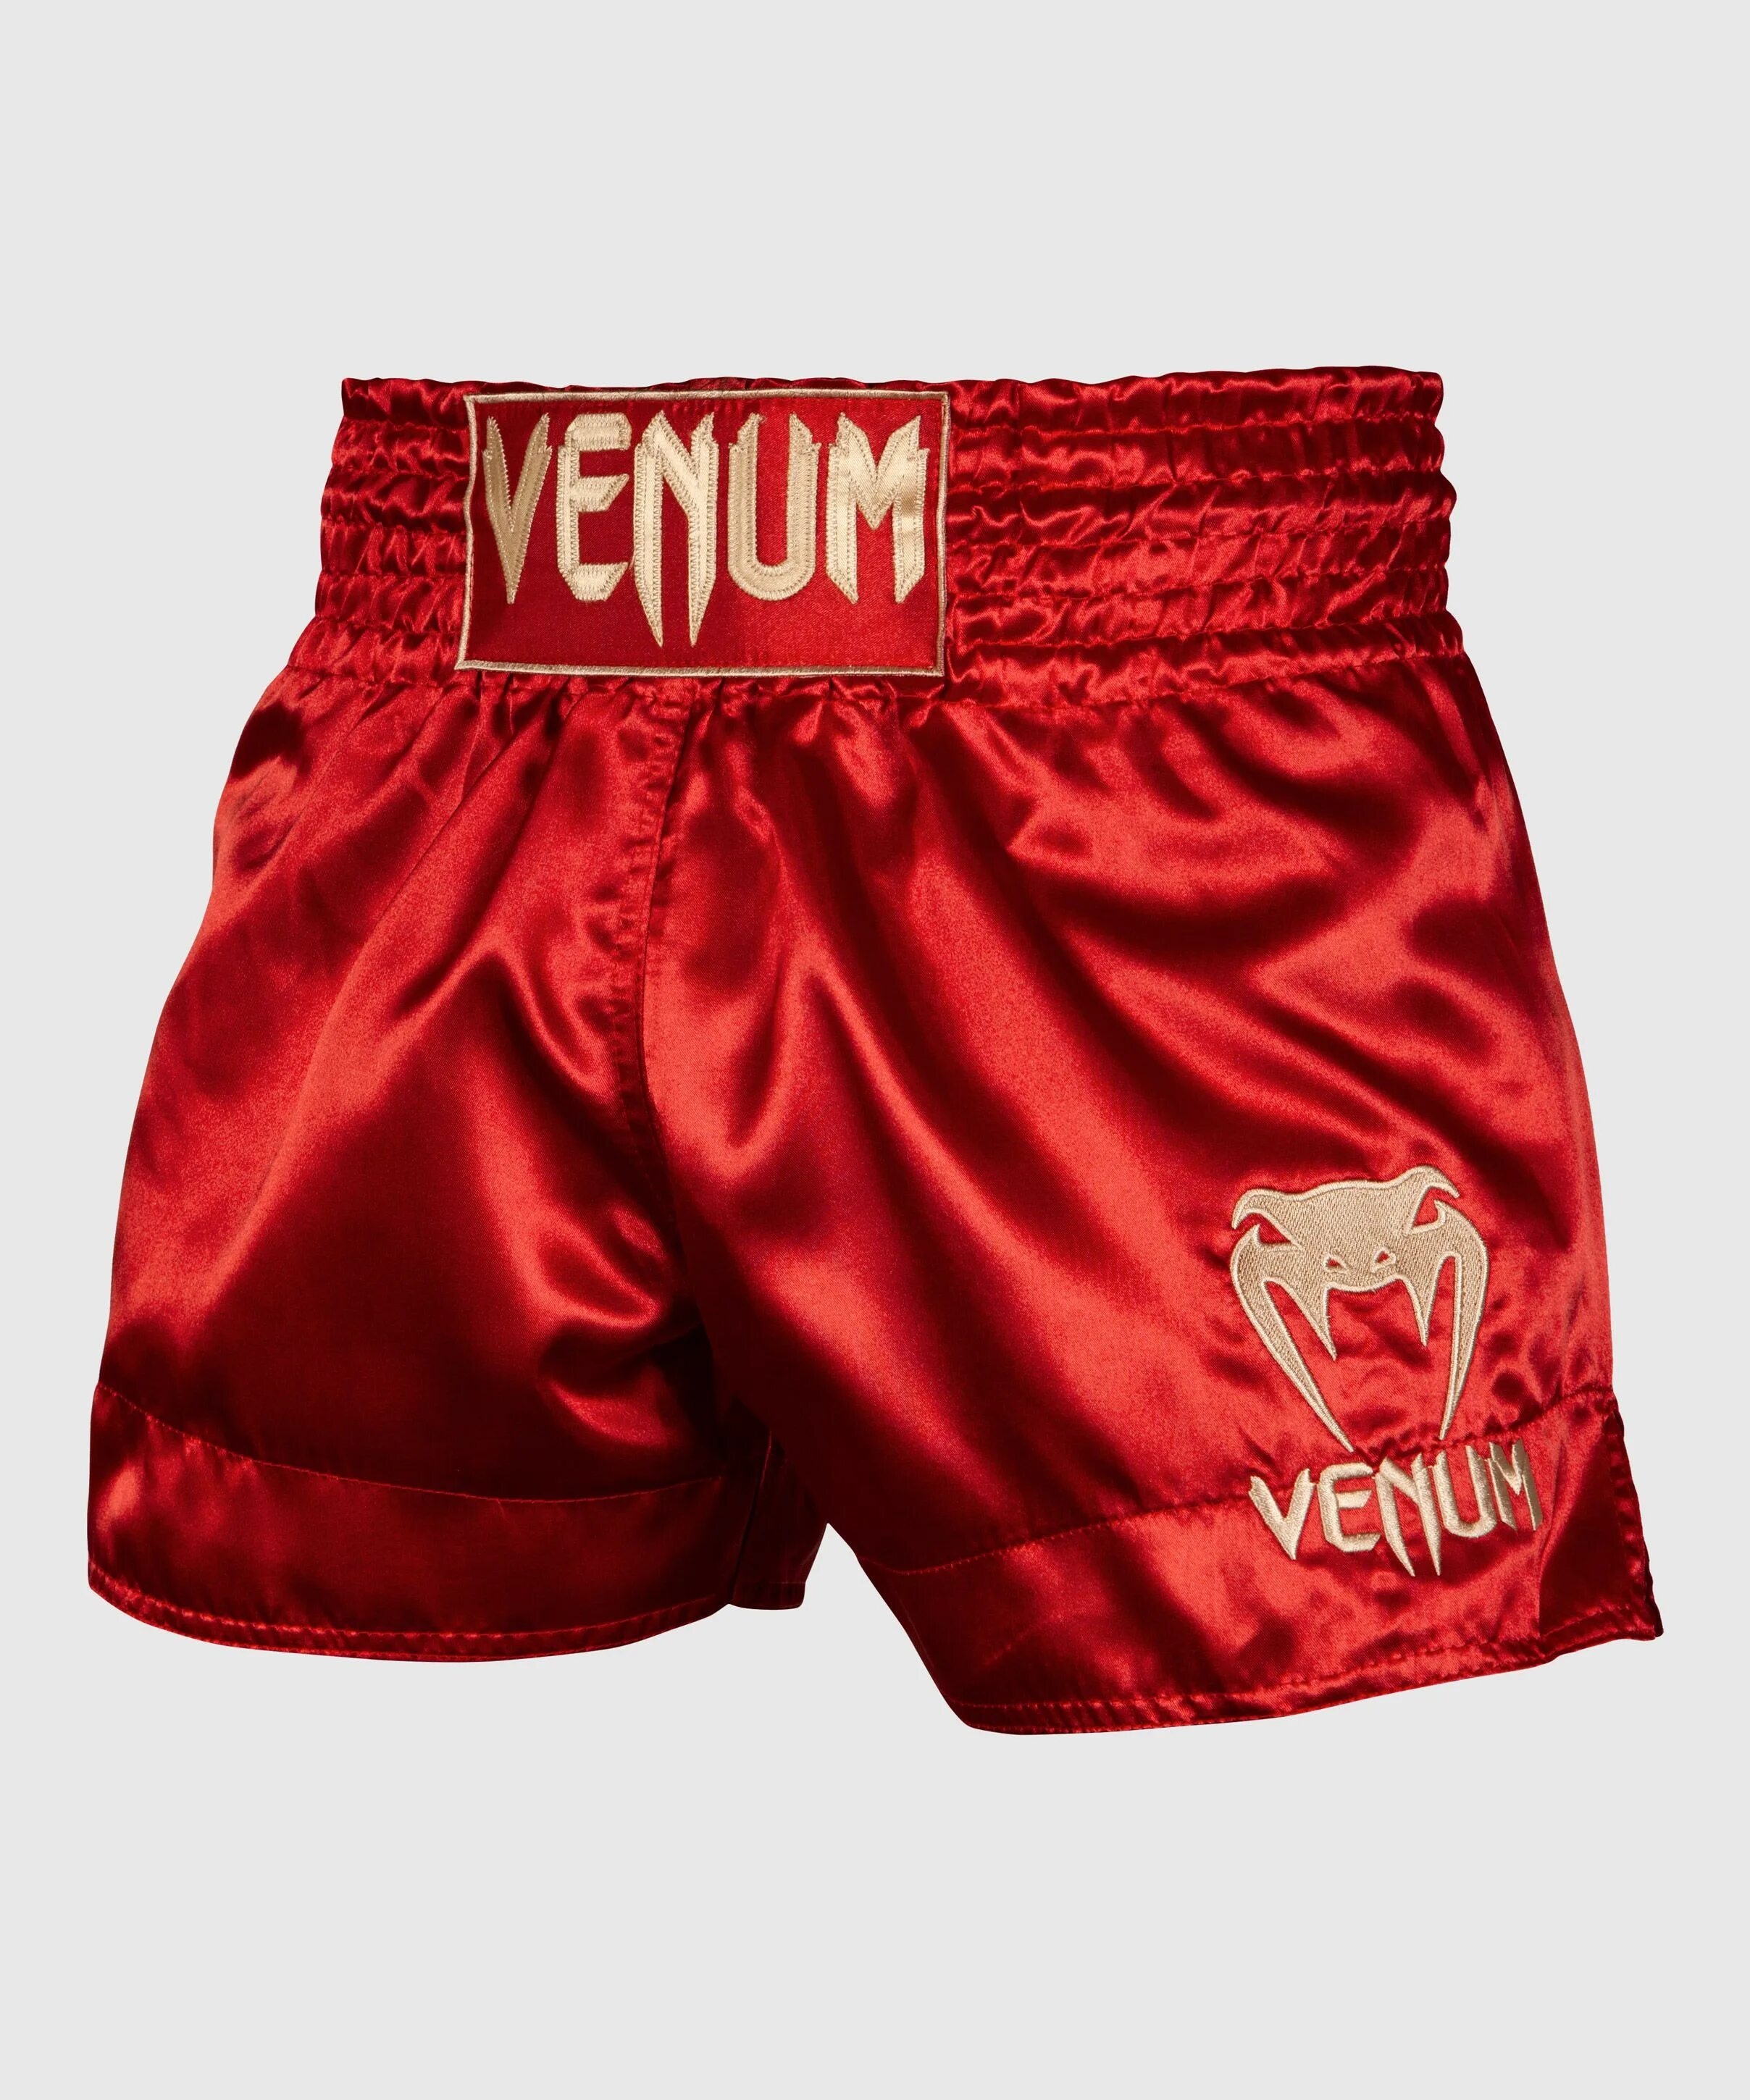 Шорты муай. Муай Тай шорты Венум. Шорты Venum Muay Thai. Шорты Венум для тайского бокса. Шорты для тайского бокса Venum.